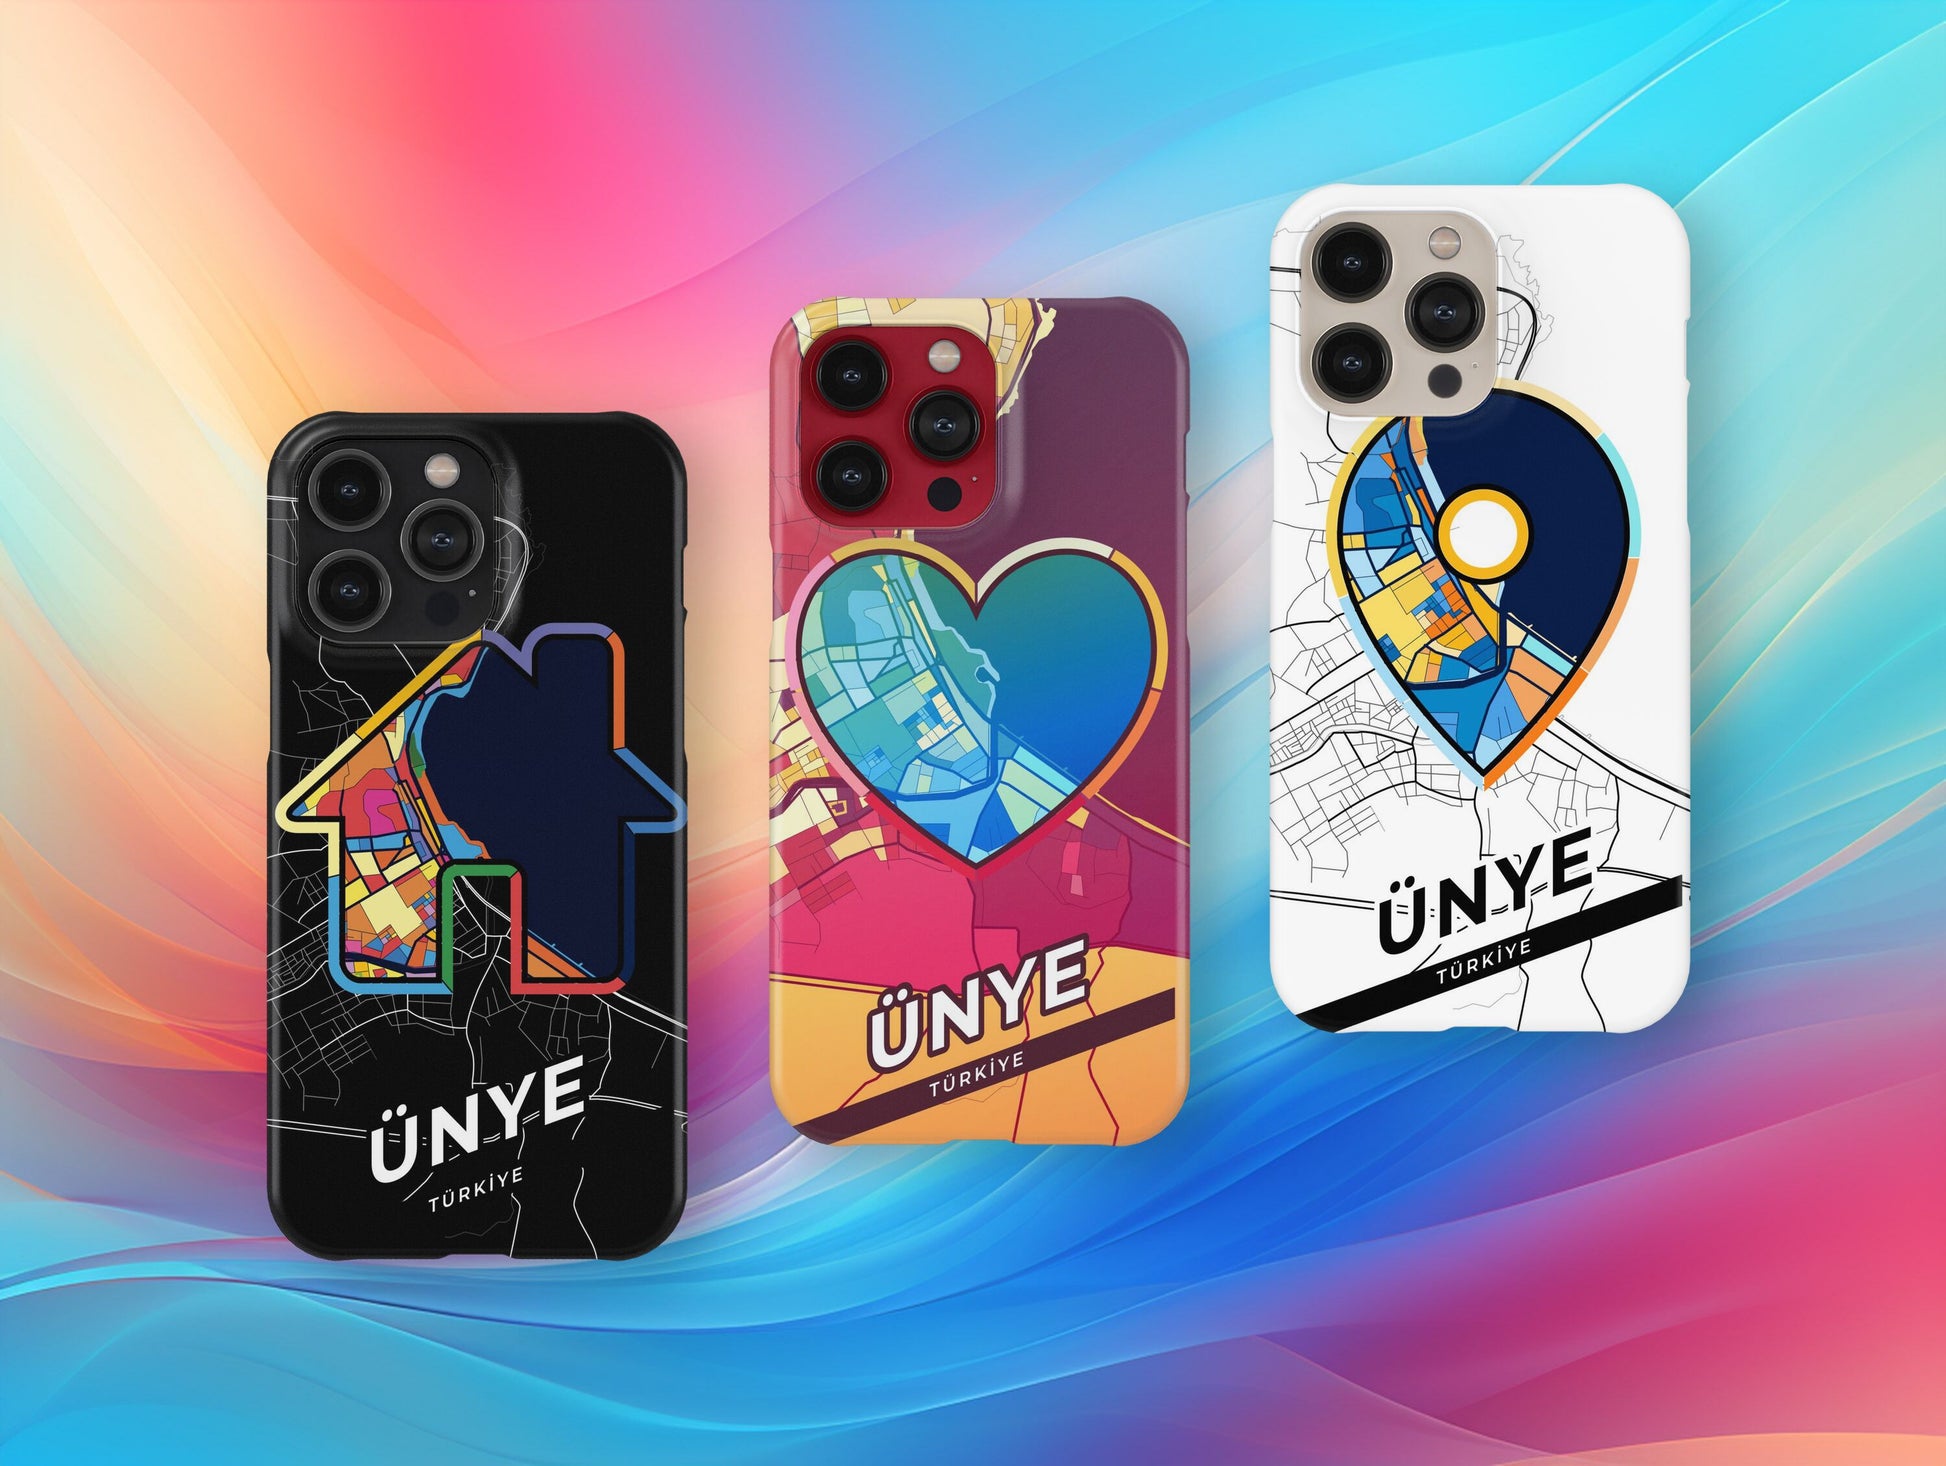 Ünye Turkey slim phone case with colorful icon